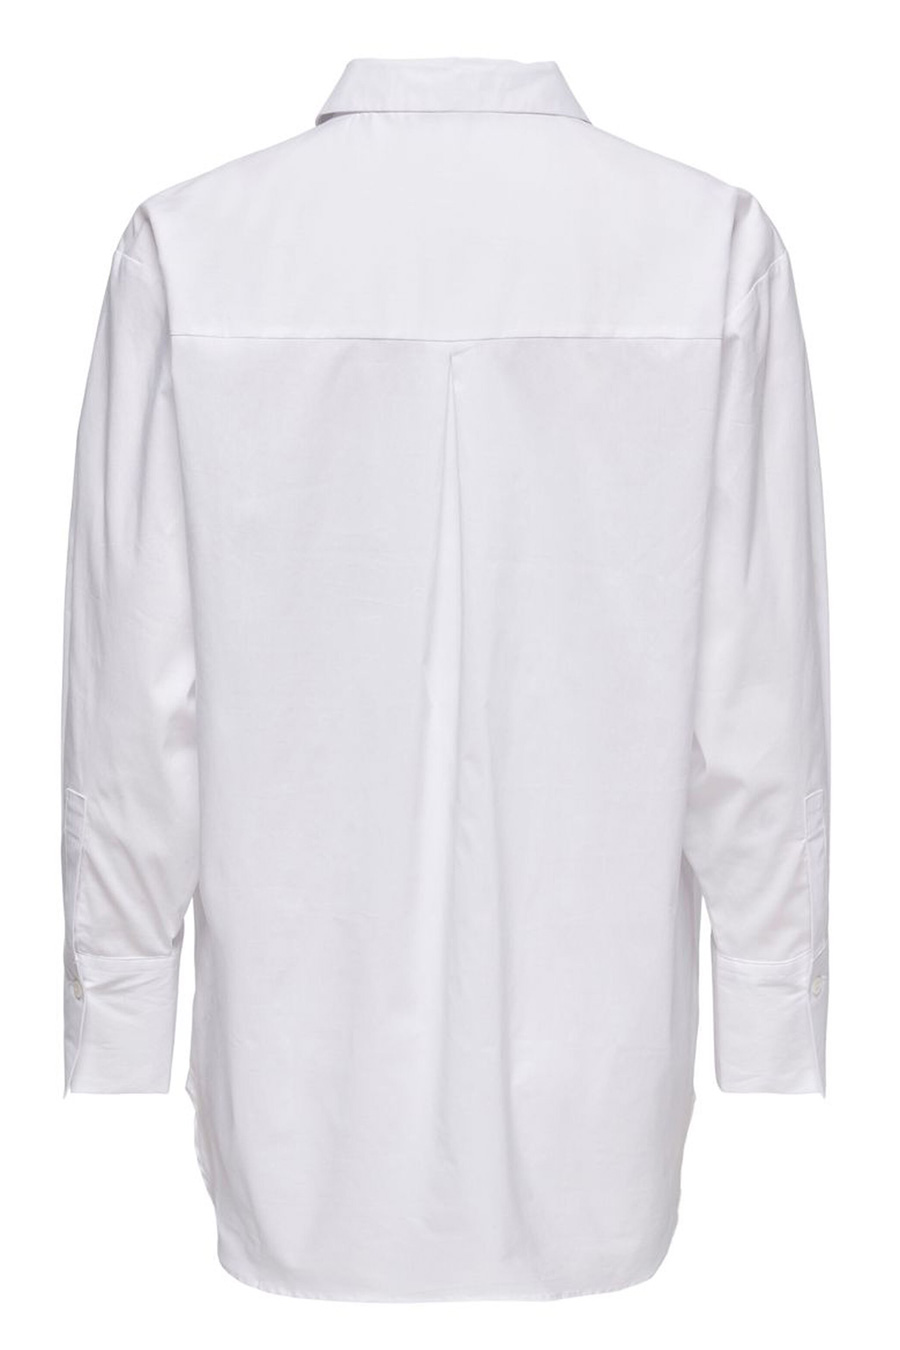 Marškiniai JACQUELINE DE YONG 15233486-White